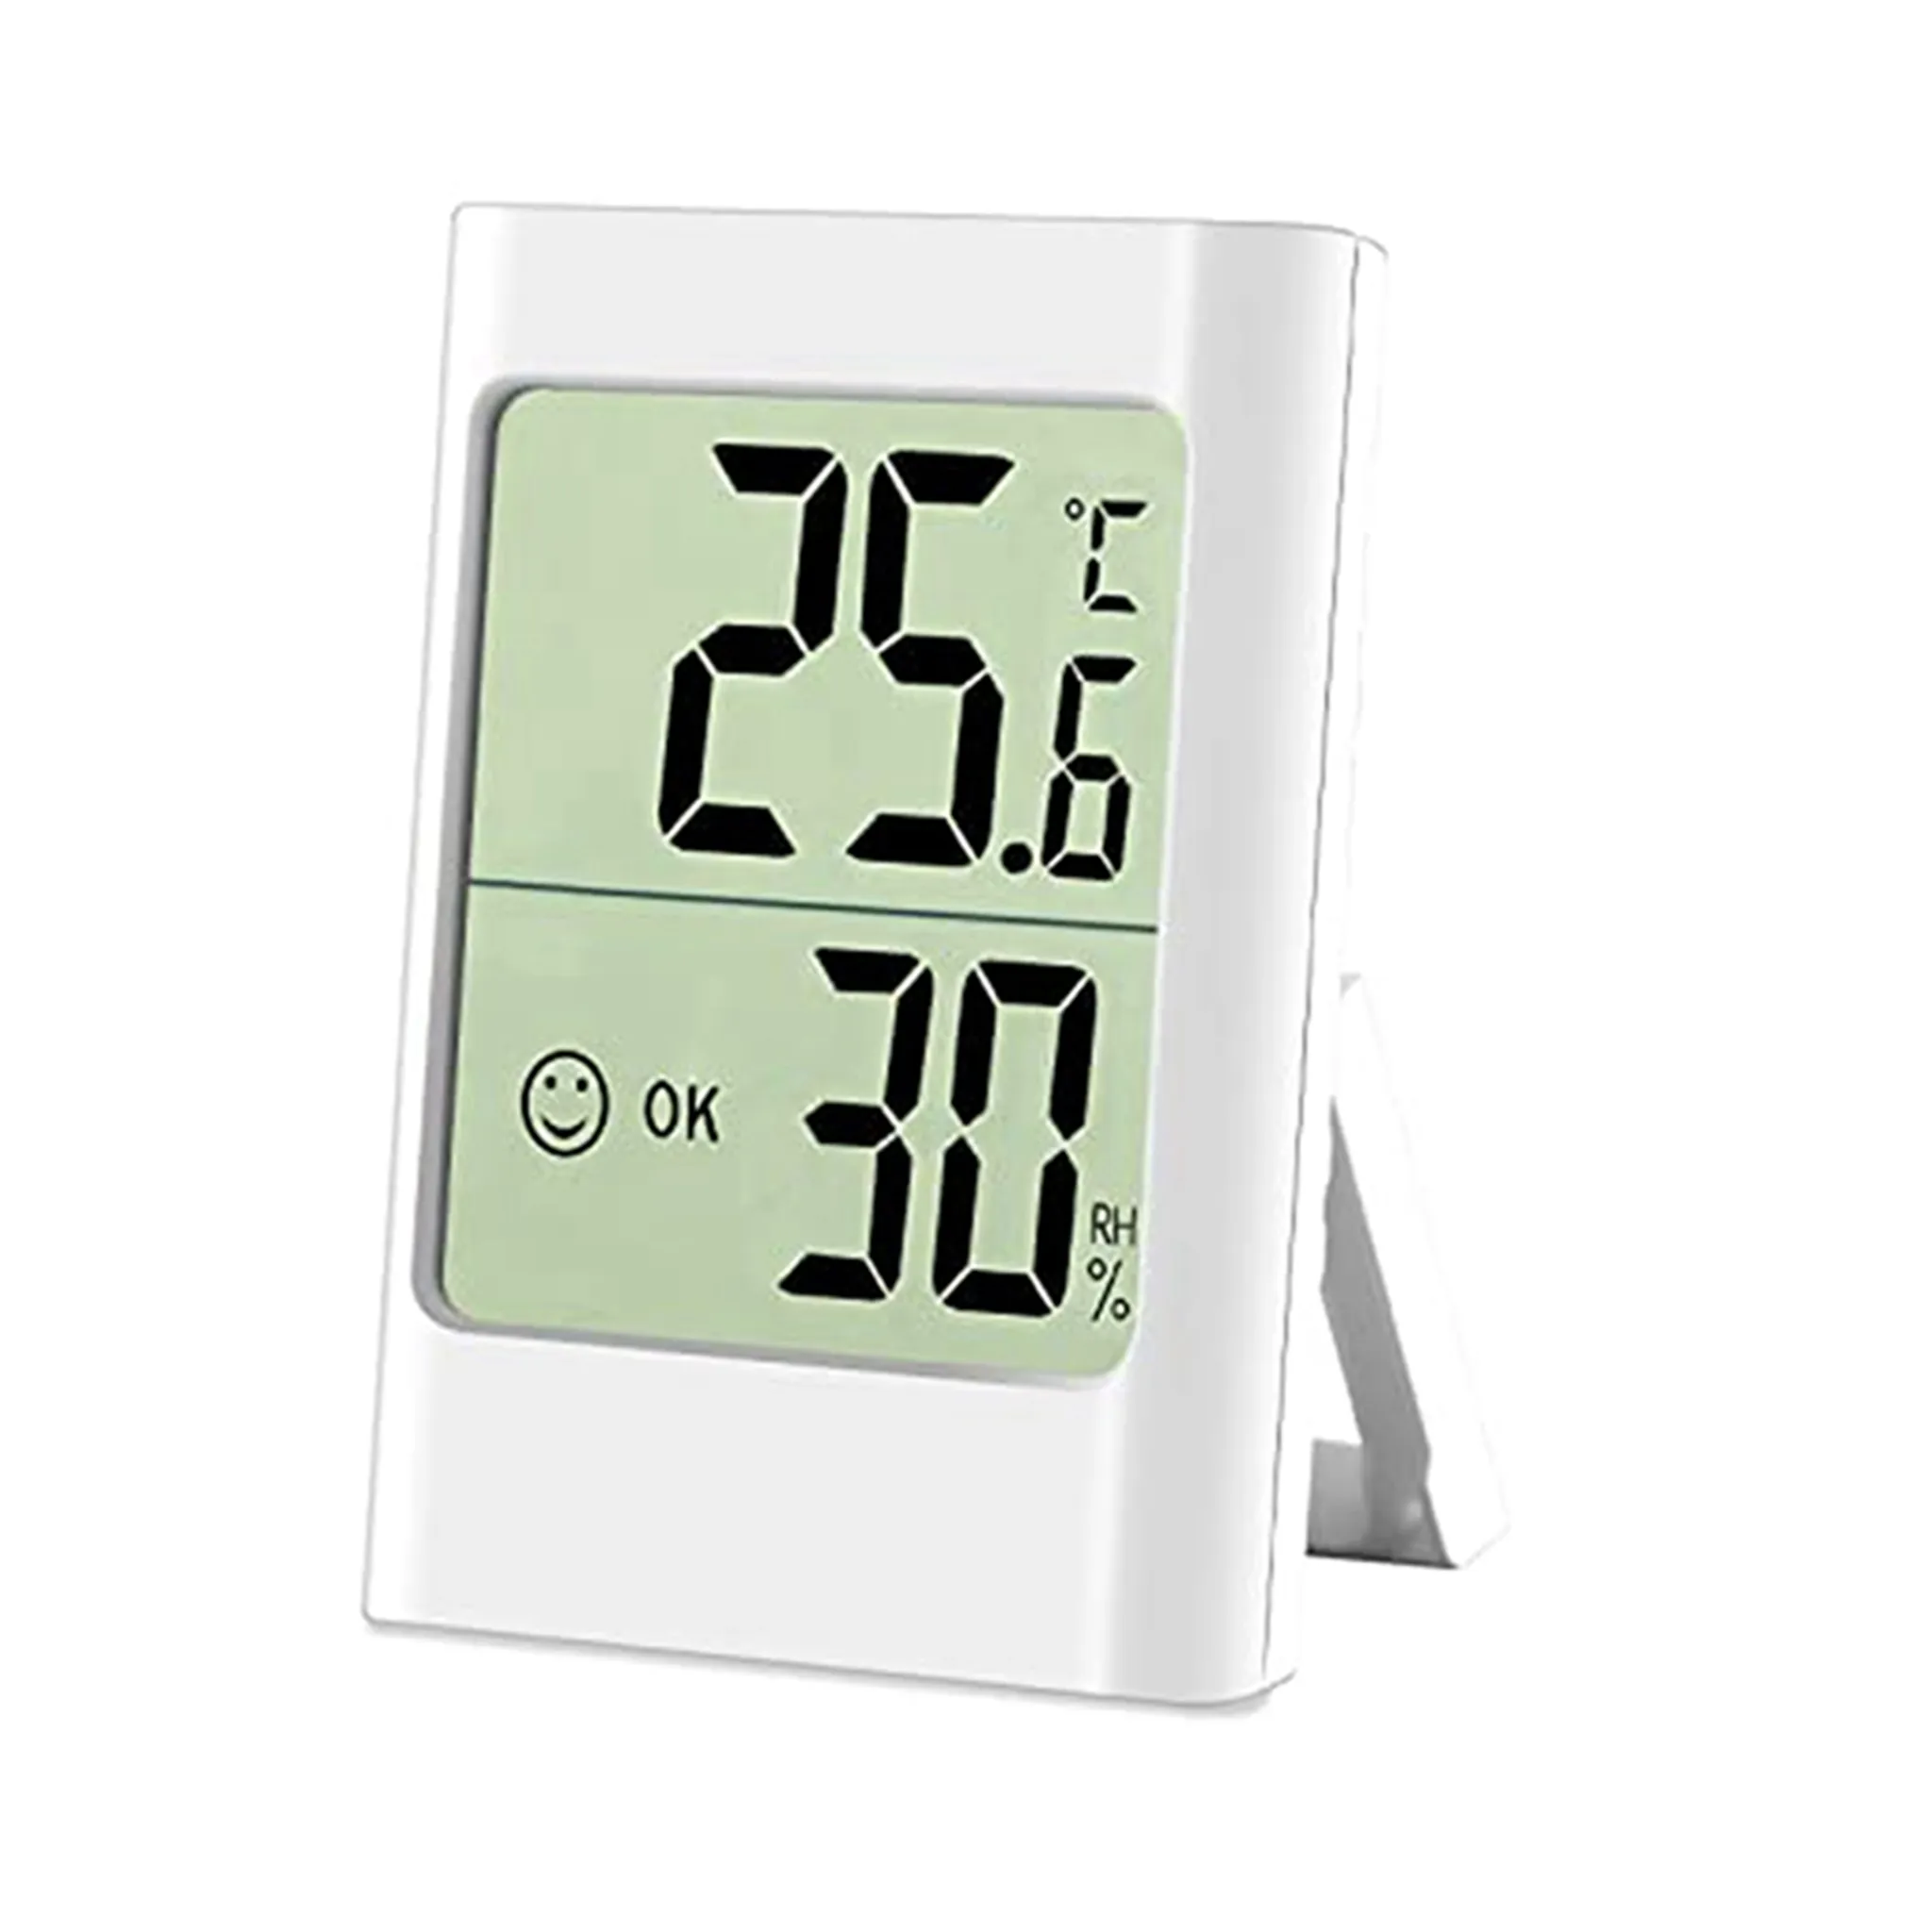 Digitales Mini Thermo Hygrometer, Thermometer